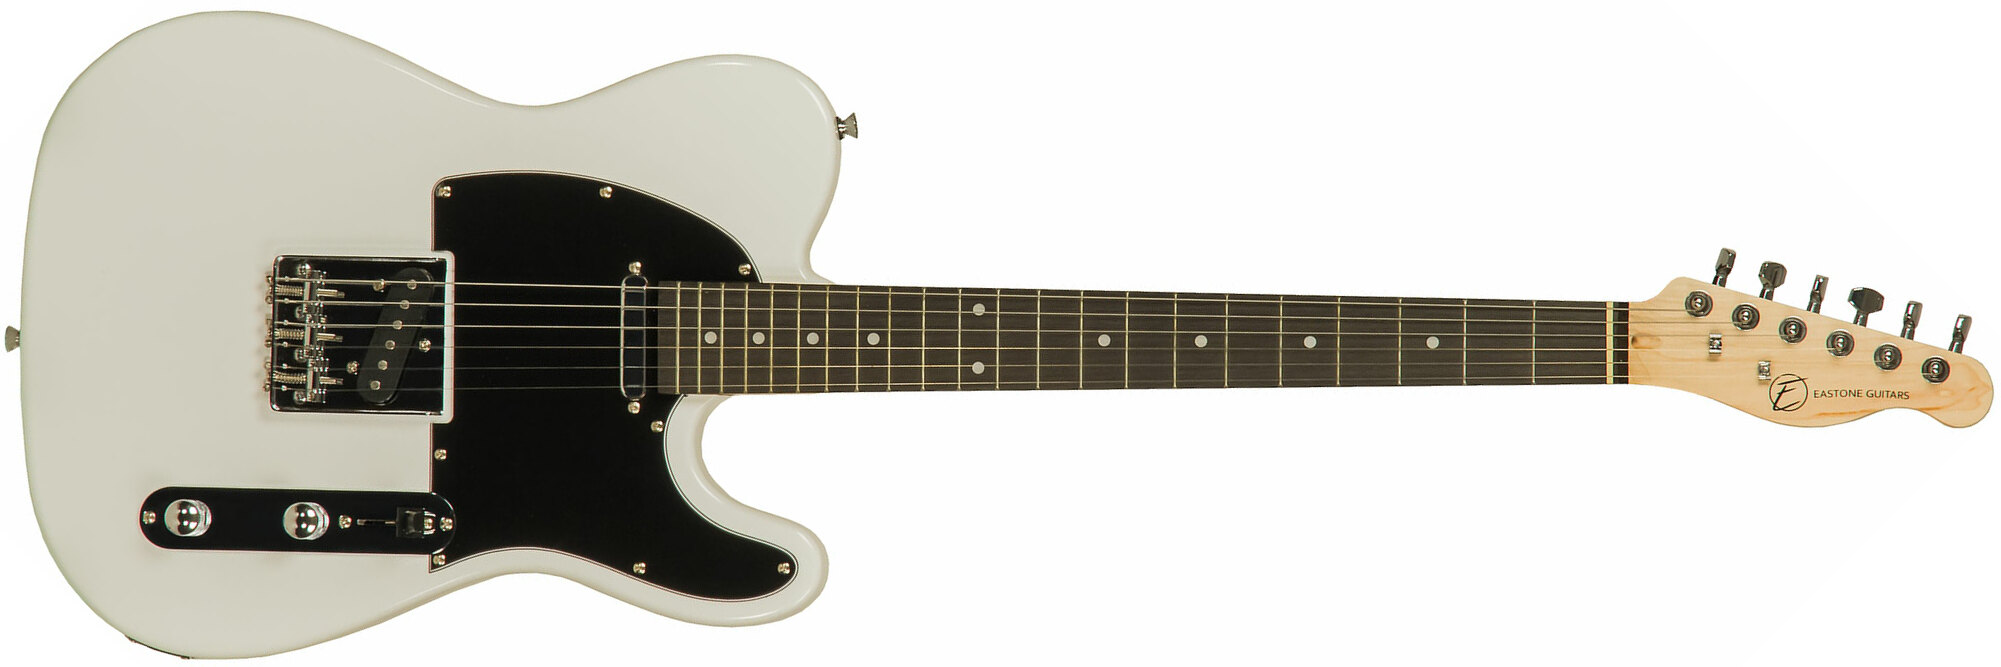 Eastone Tl70 2s Ht Pur - Olympic White - Guitarra eléctrica con forma de tel - Main picture